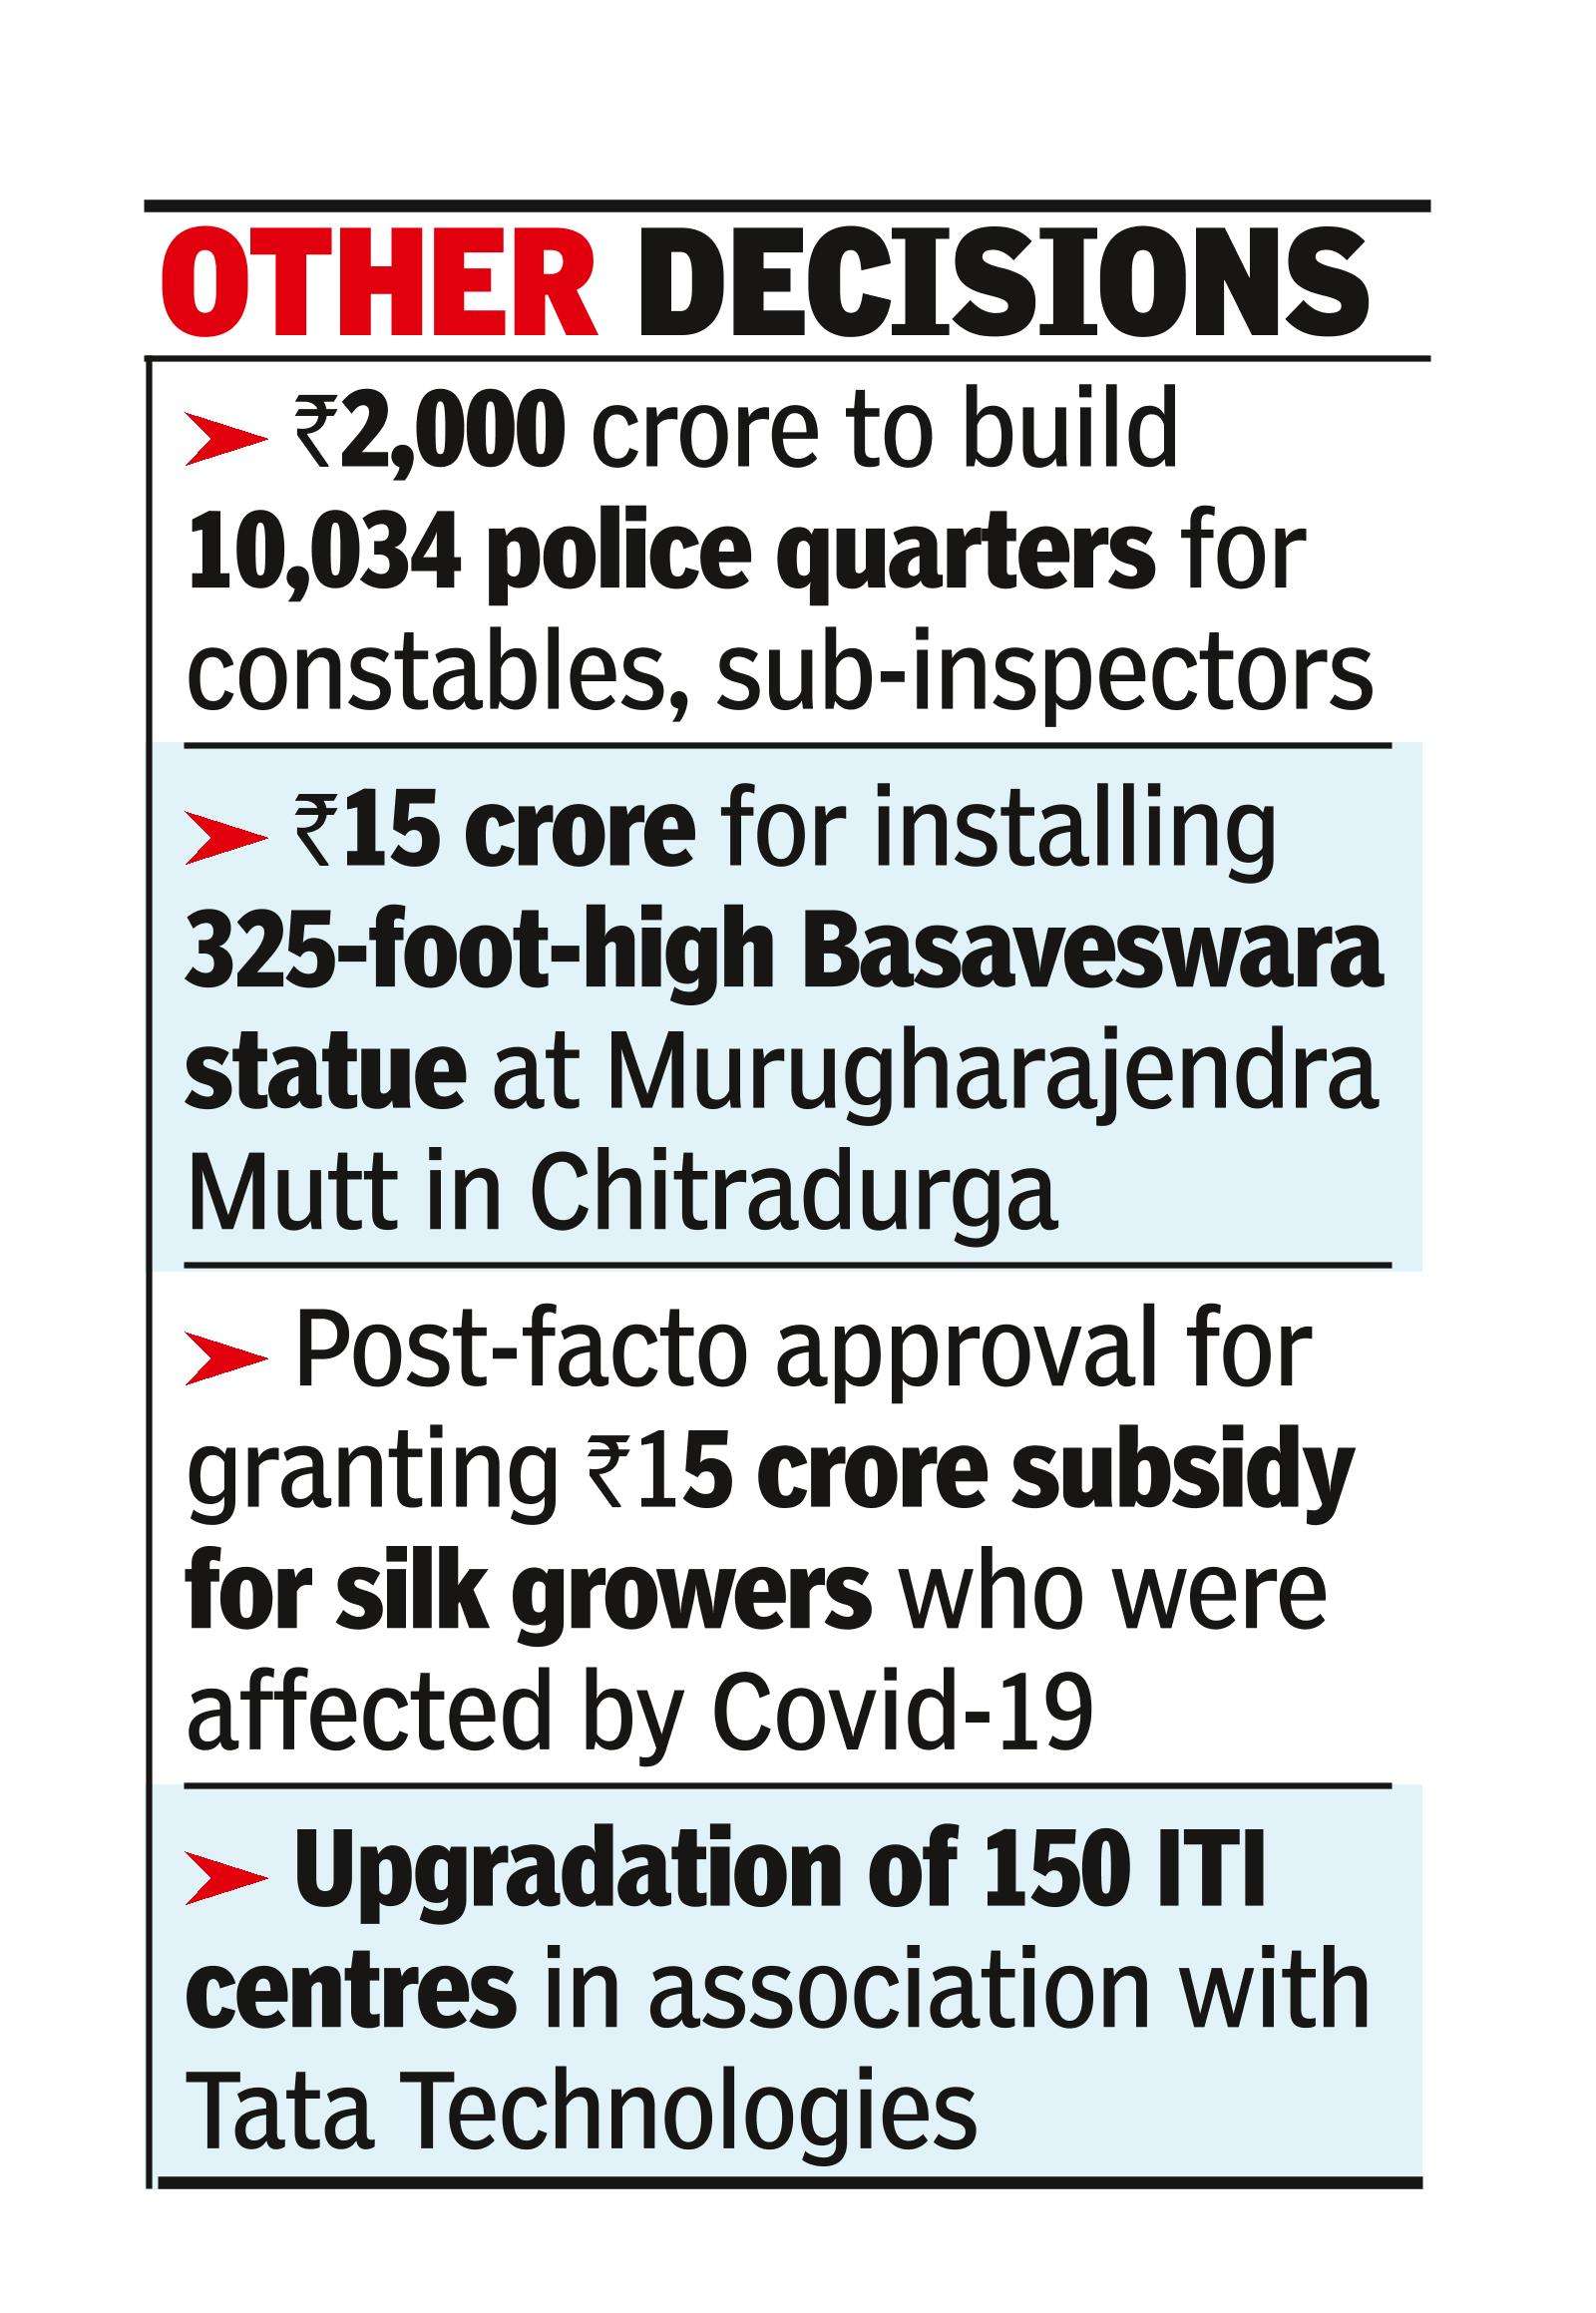 Karnataka plans tax hike, properties outside Bengaluru to get costlier